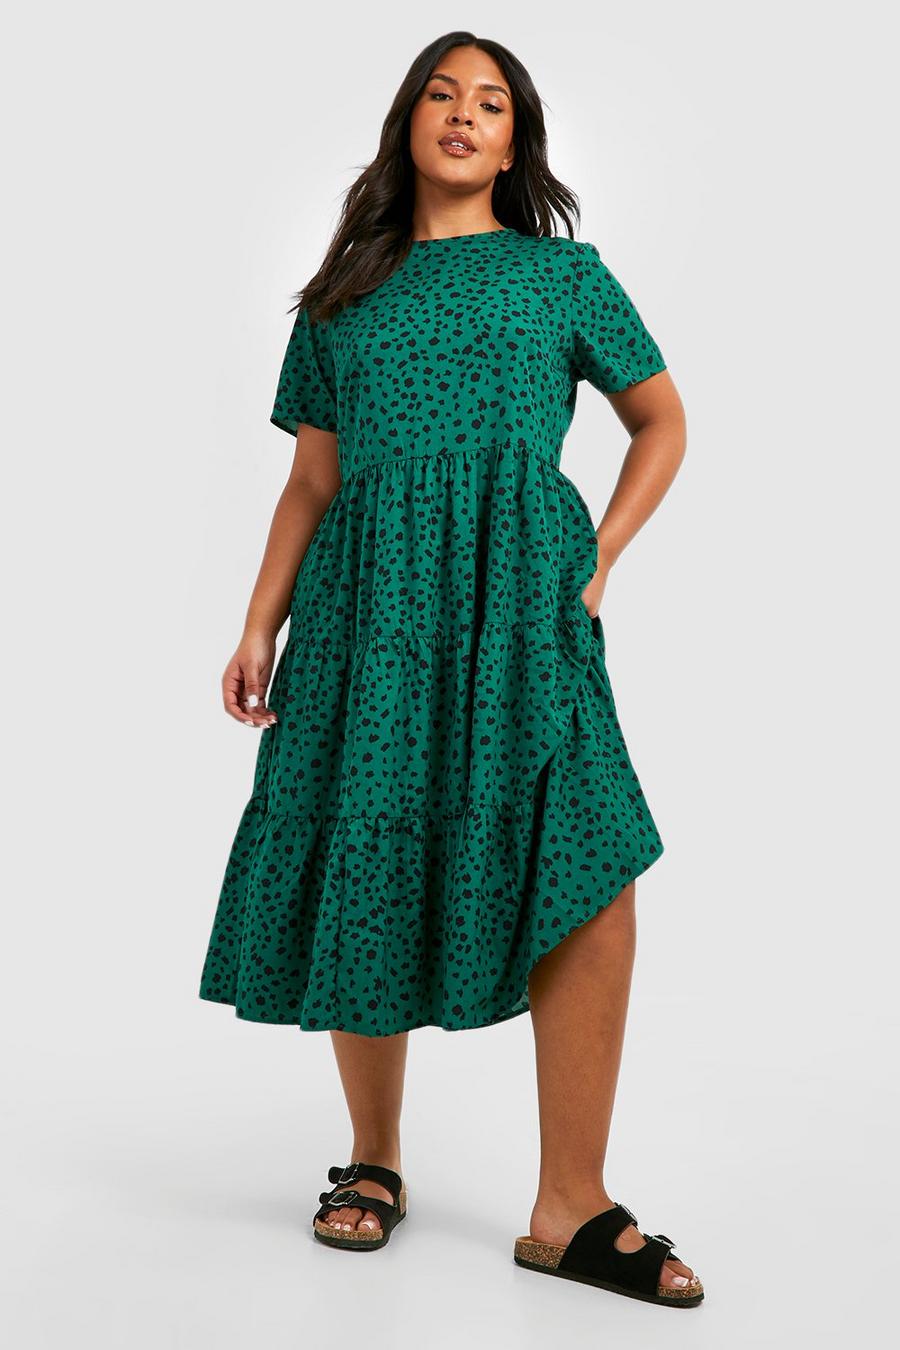 Green Ruched Side Dress - Matalan